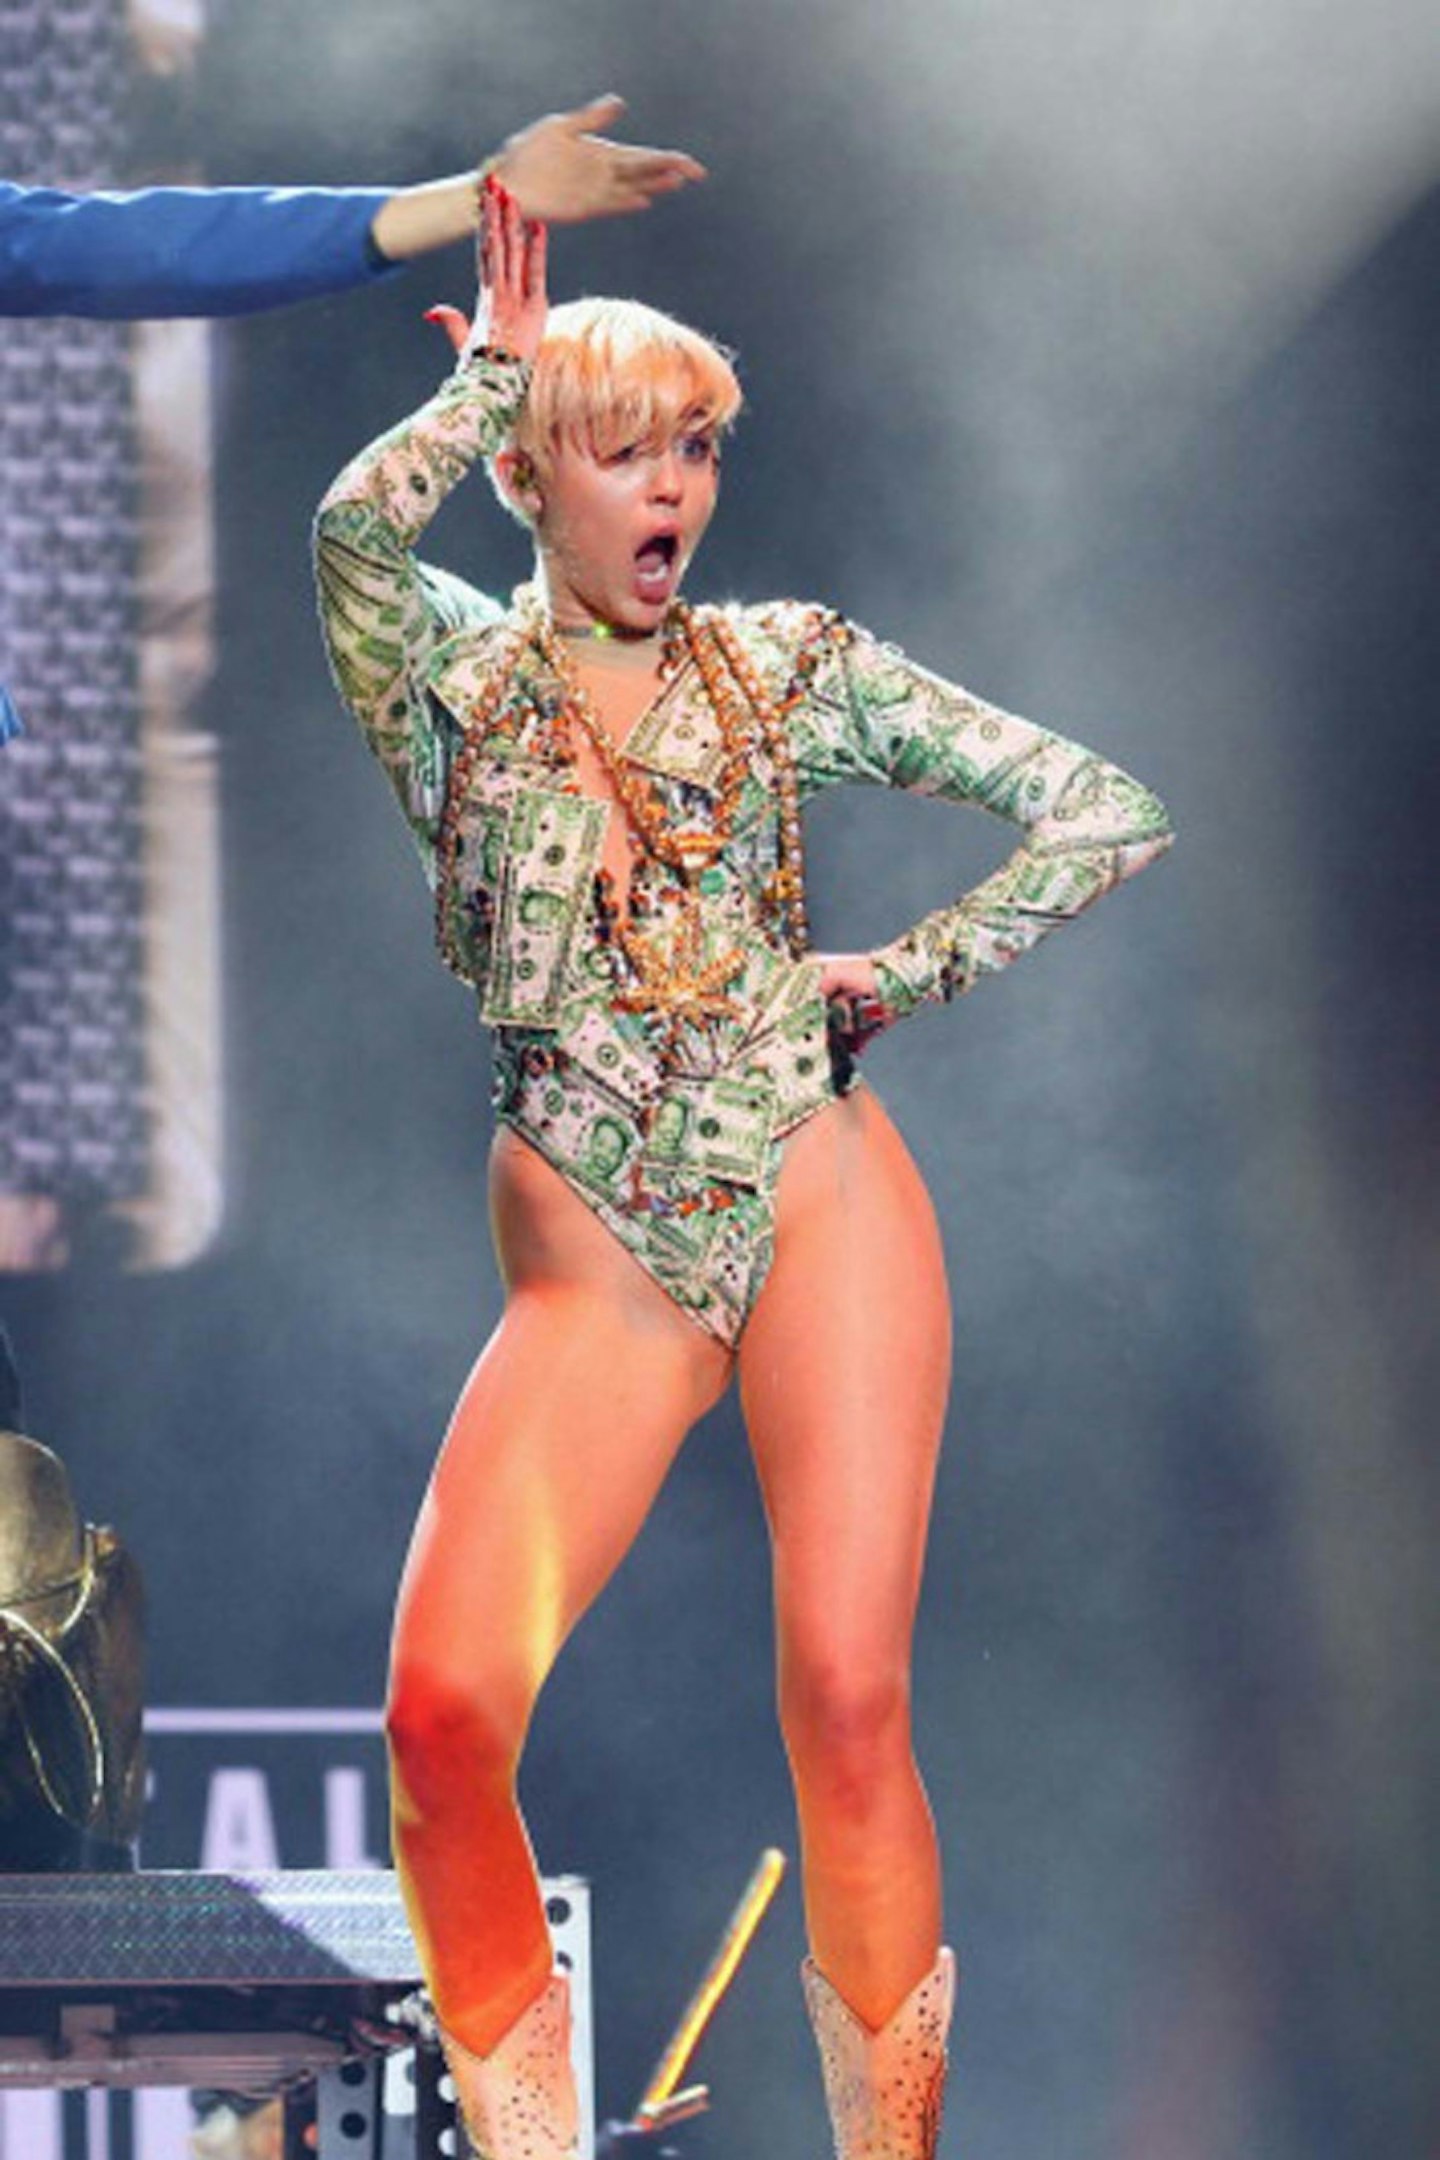 Miley Cyrus performs at the 02 - May 20, 2014